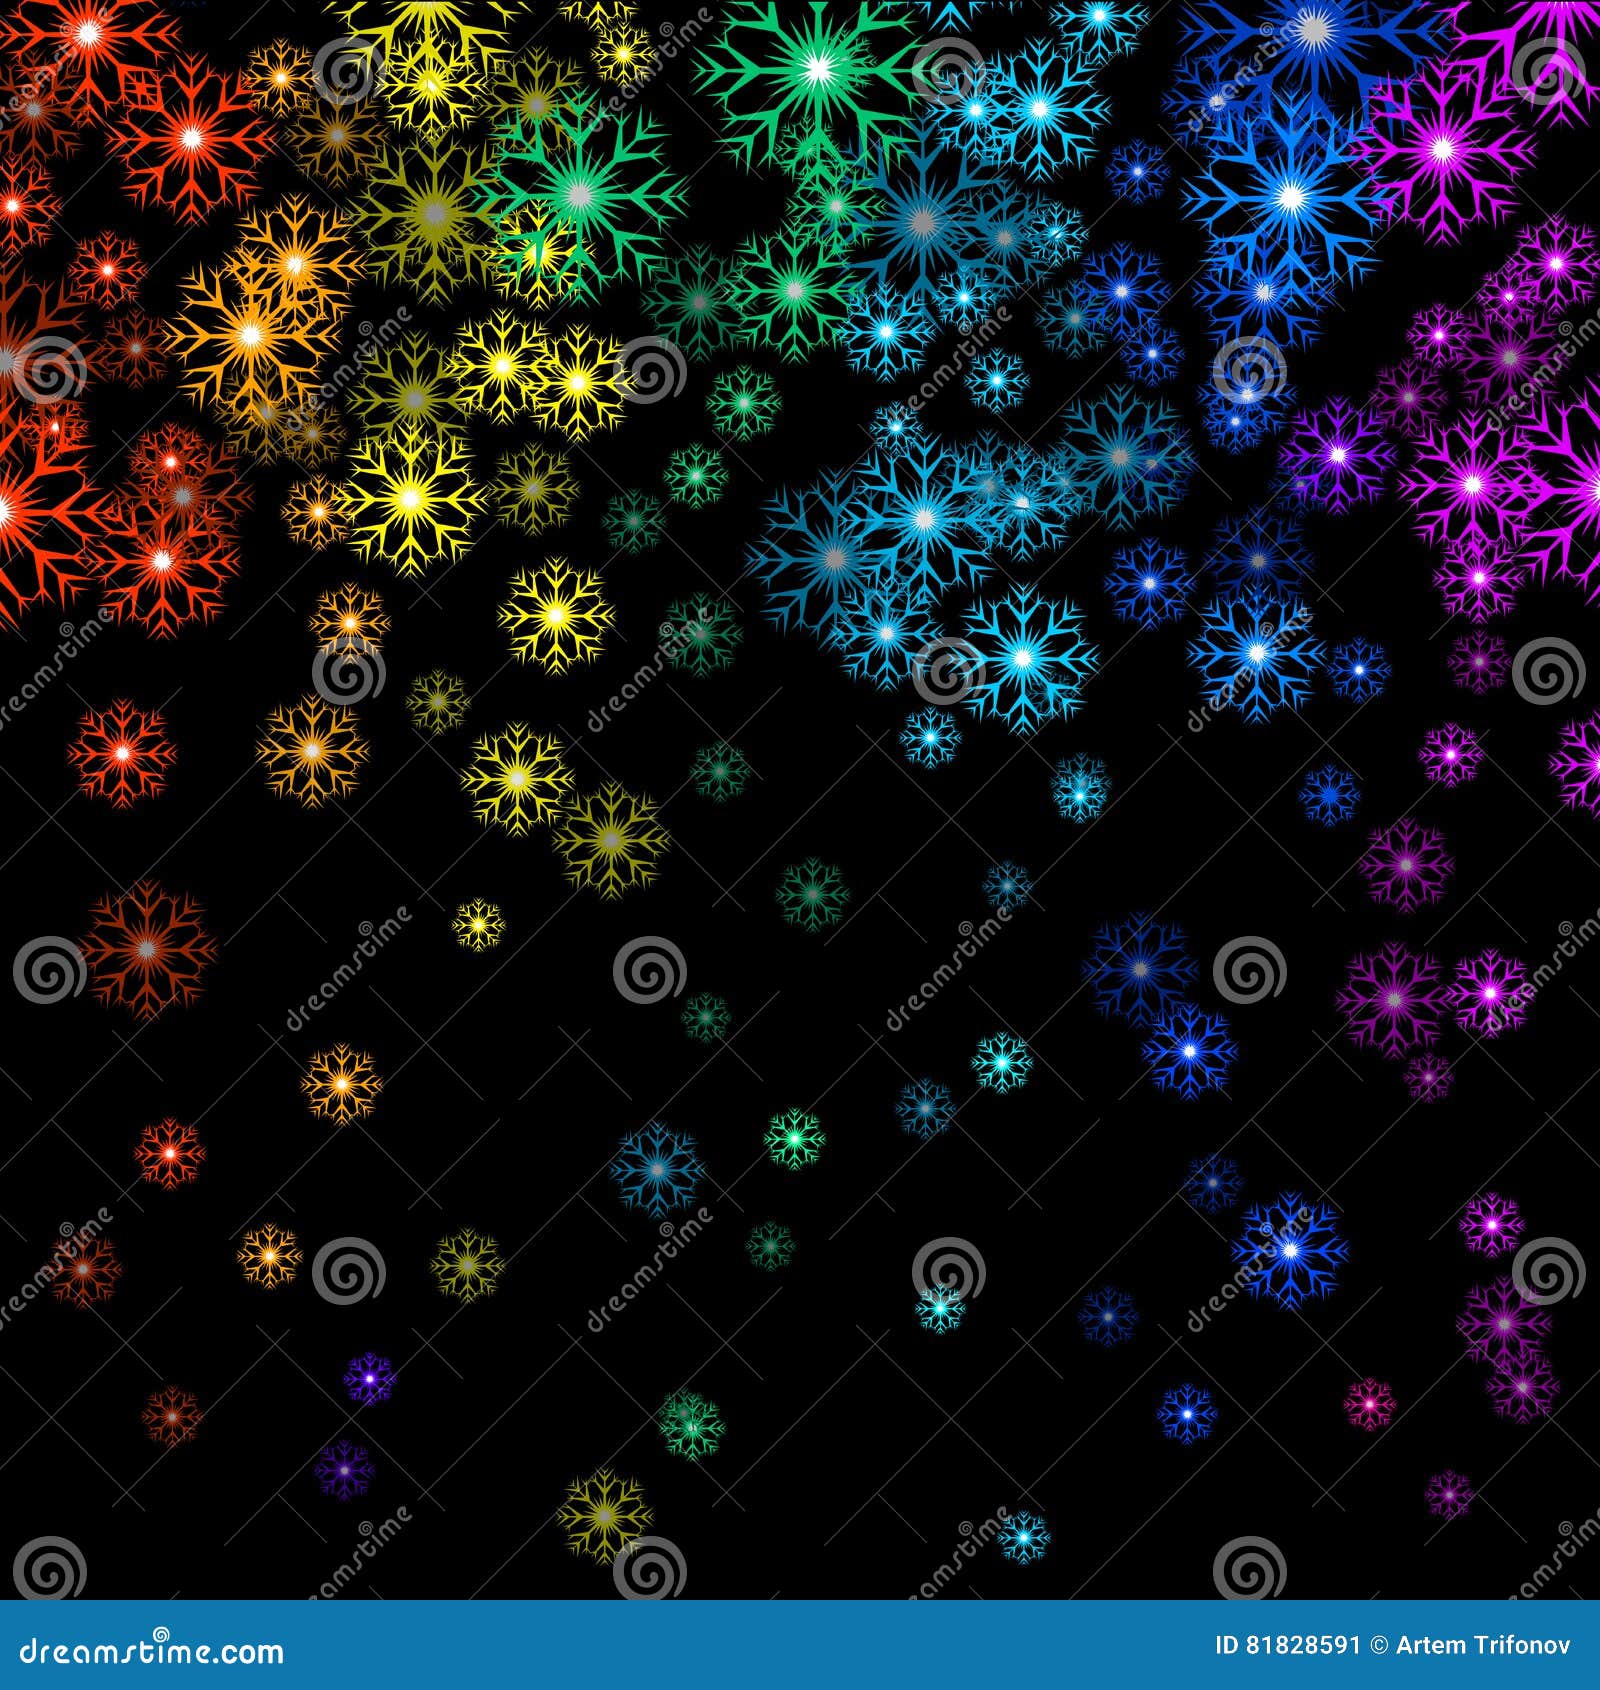 Download Vector Illustration Christmas Rainbow Snowflakes On Black ...